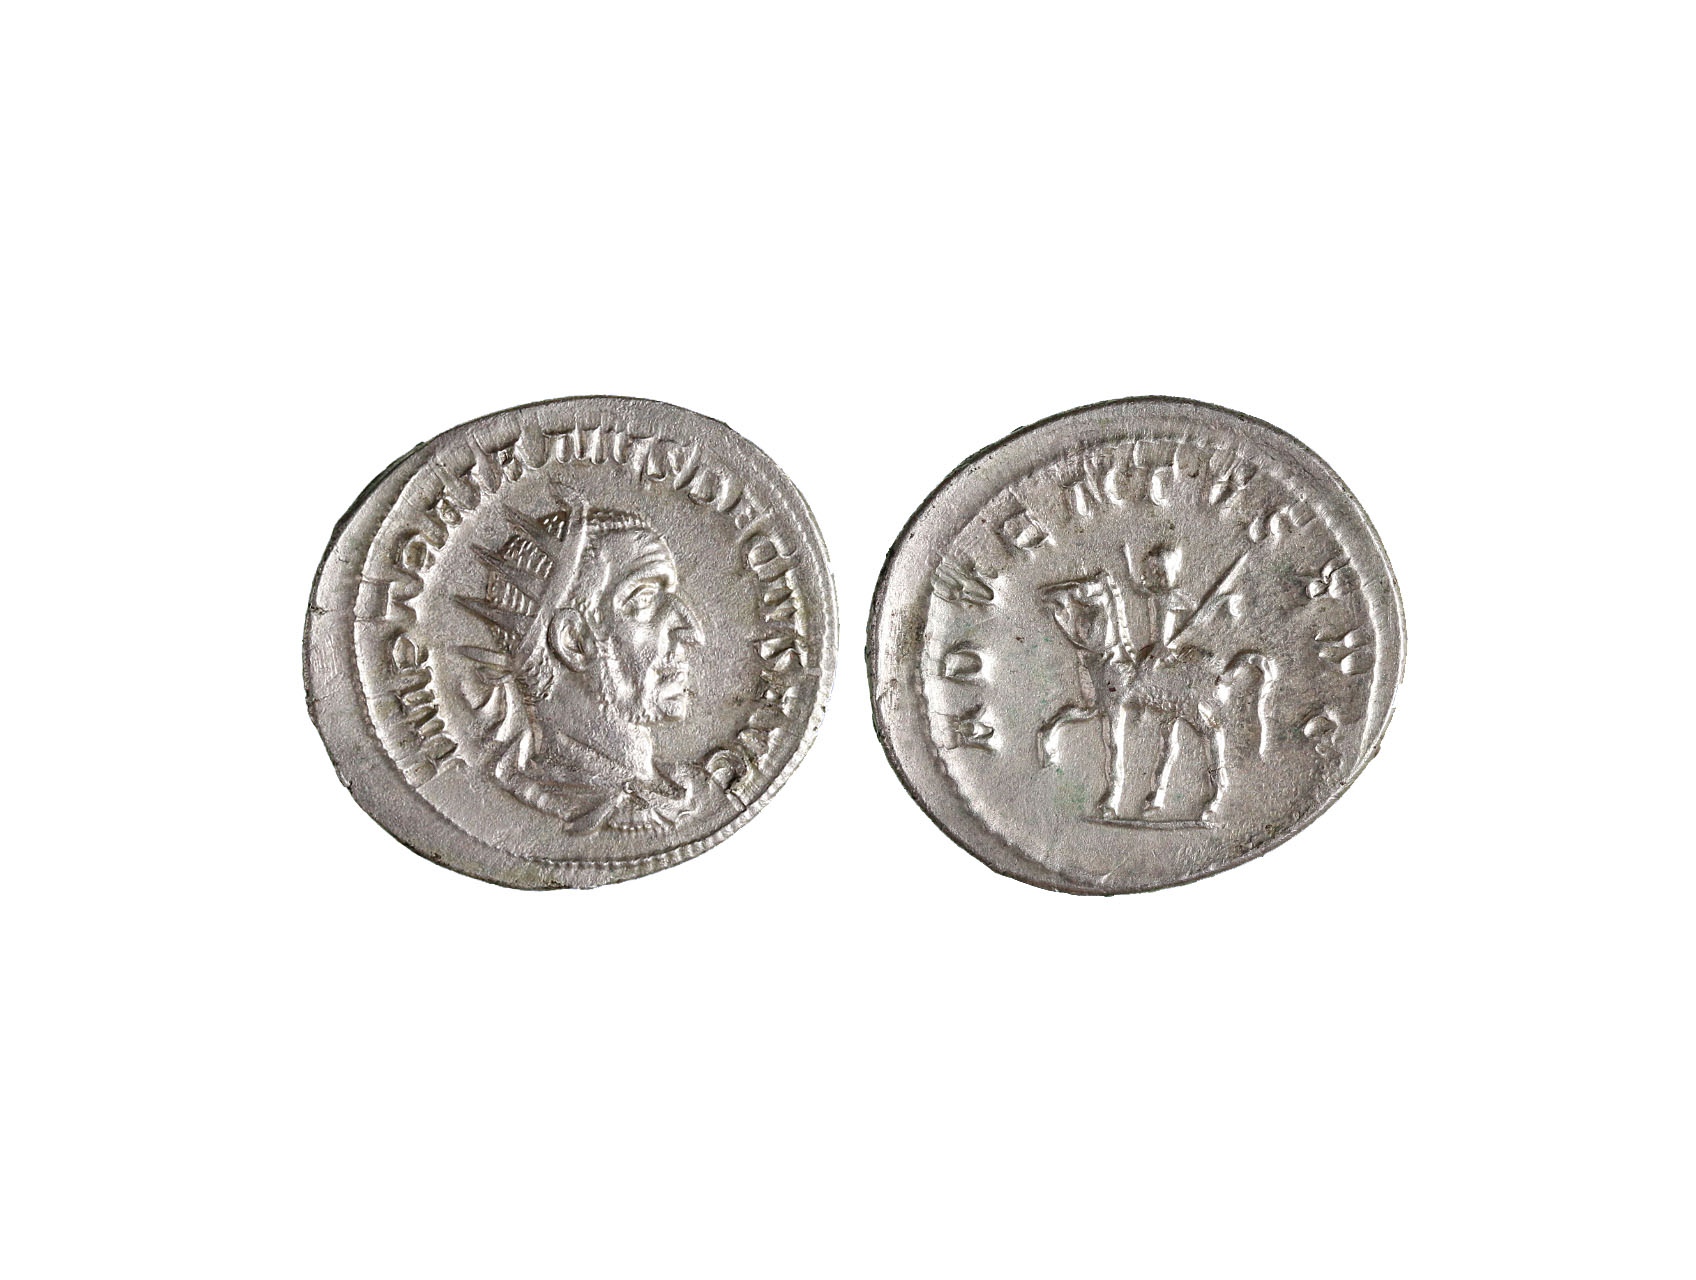 Řím císařství, Traianus Decius 249-251 n.l. - Antoninian